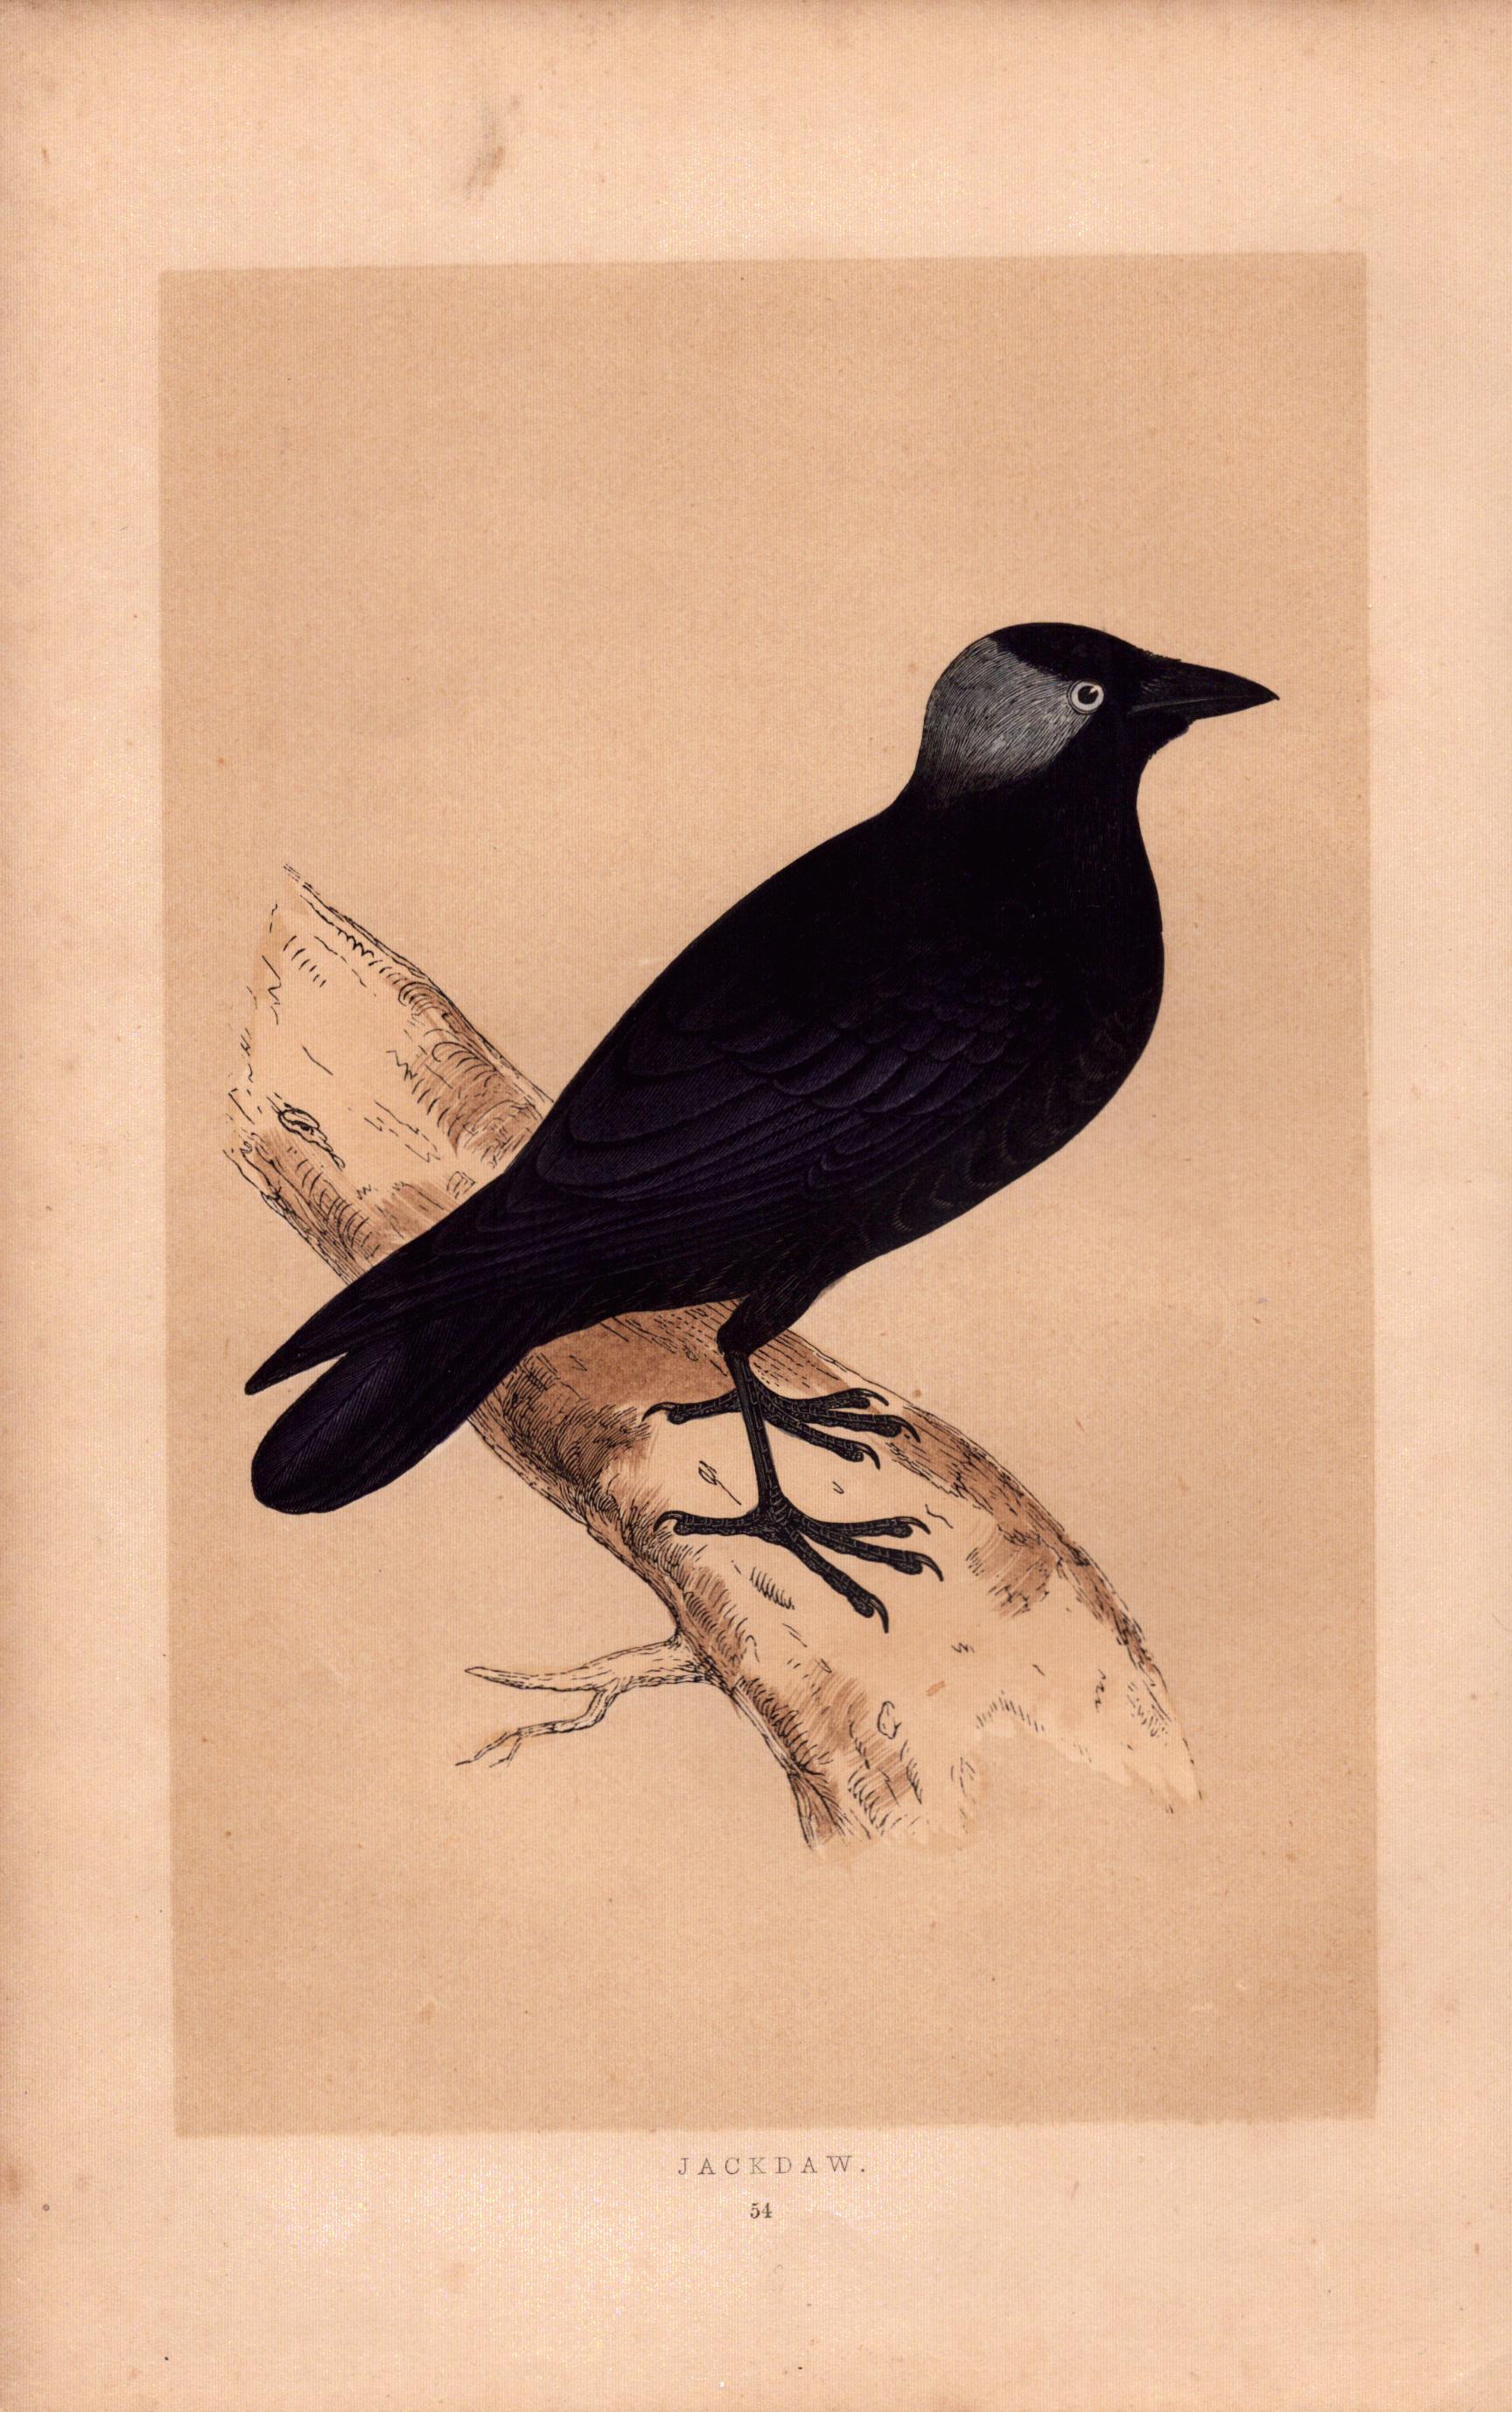 Jackdaw Rev Morris Antique History of British Birds Engraving.